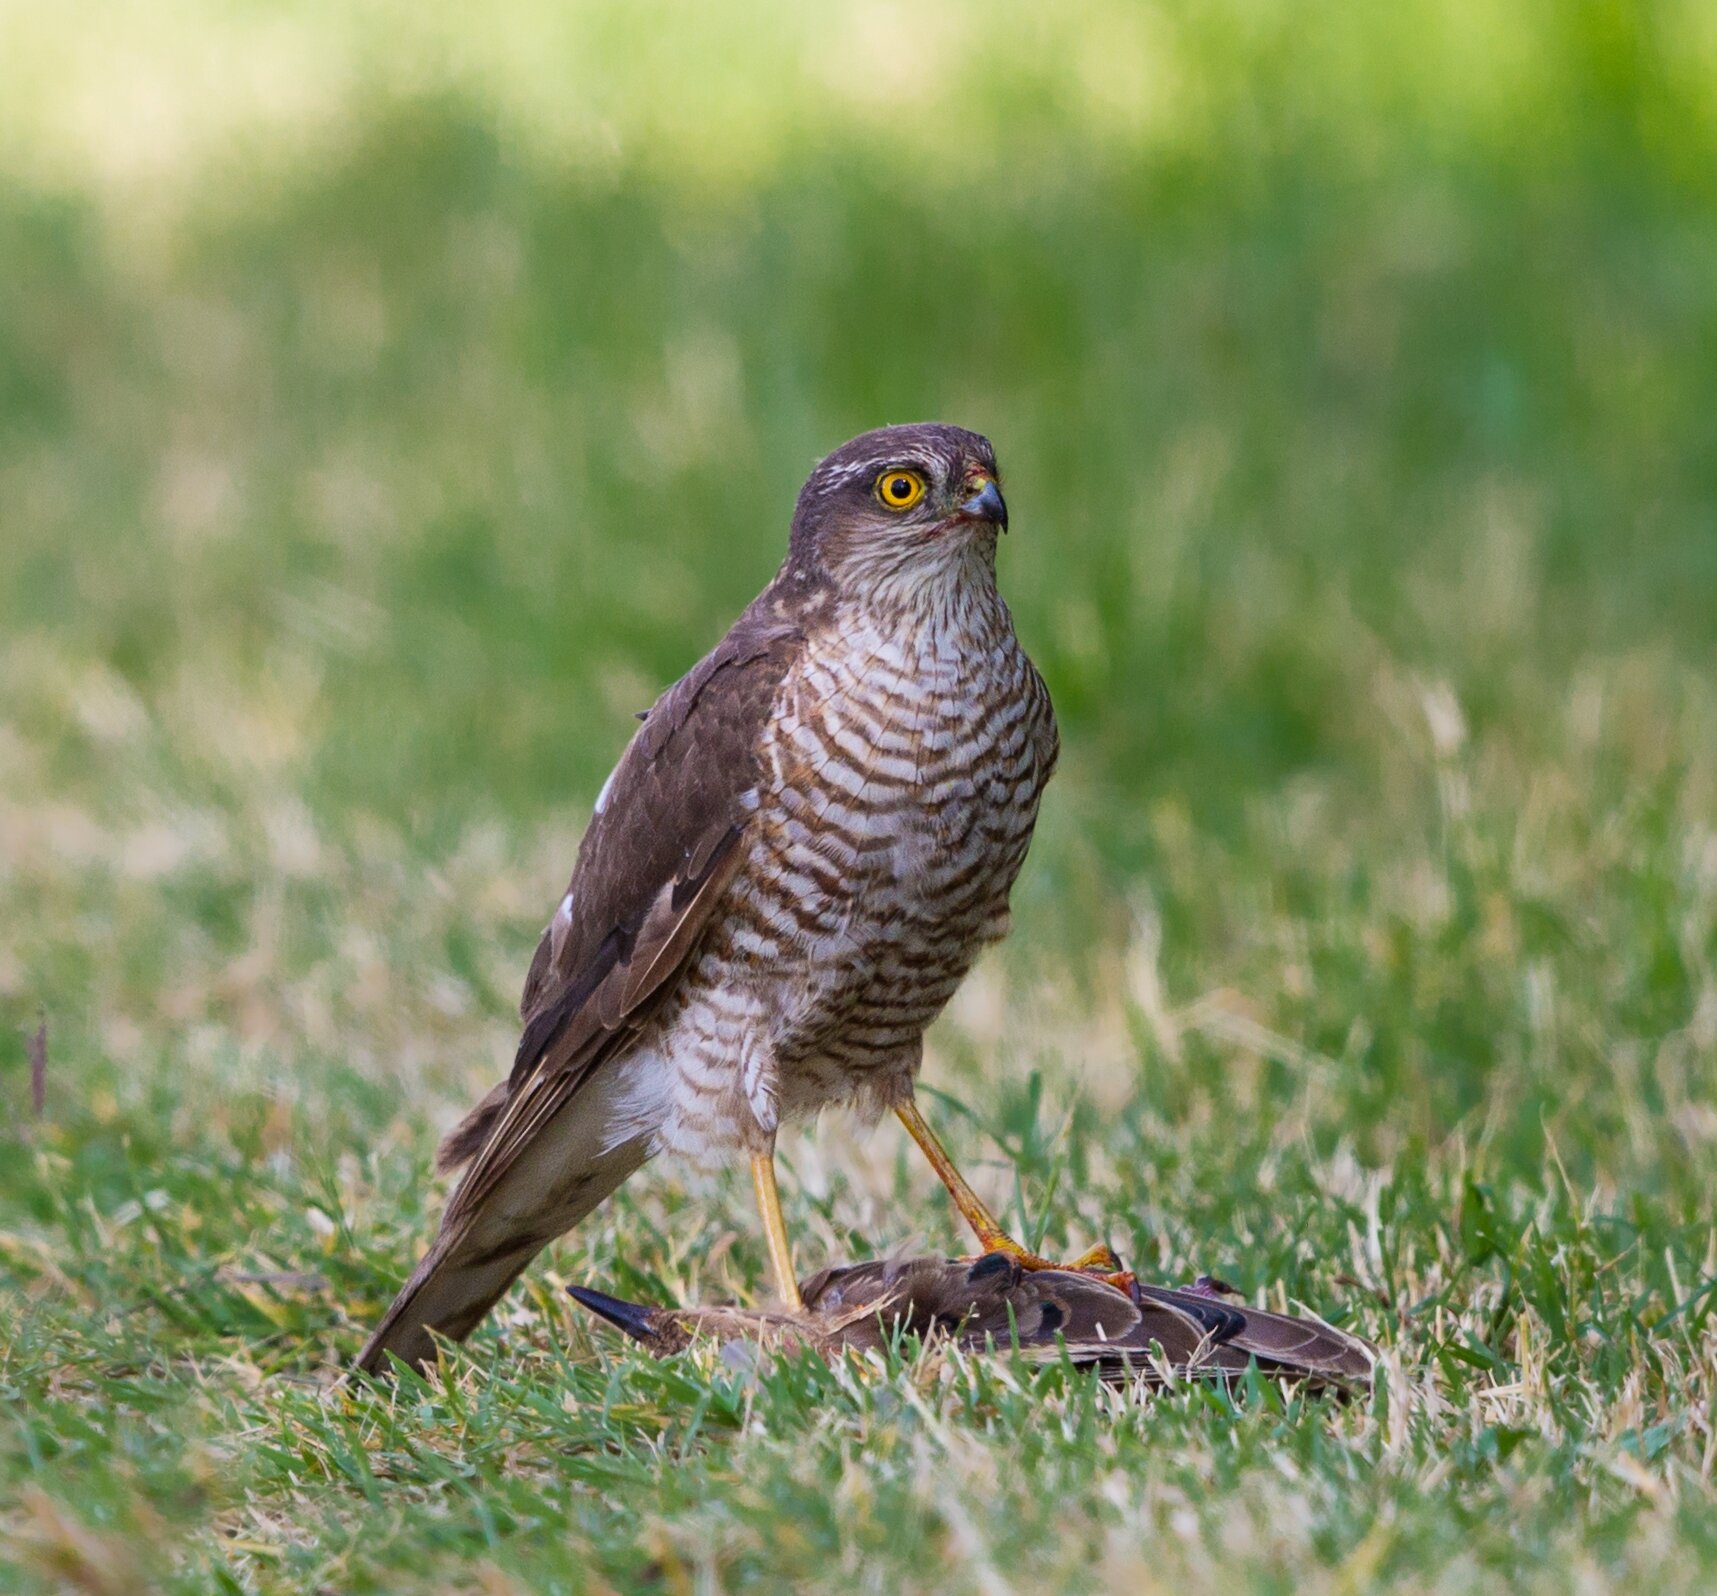 Pierre Dalous, Sparrowhawk with its prey Krogulec na ziemi Źródło: Pierre Dalous, Sparrowhawk with its prey.